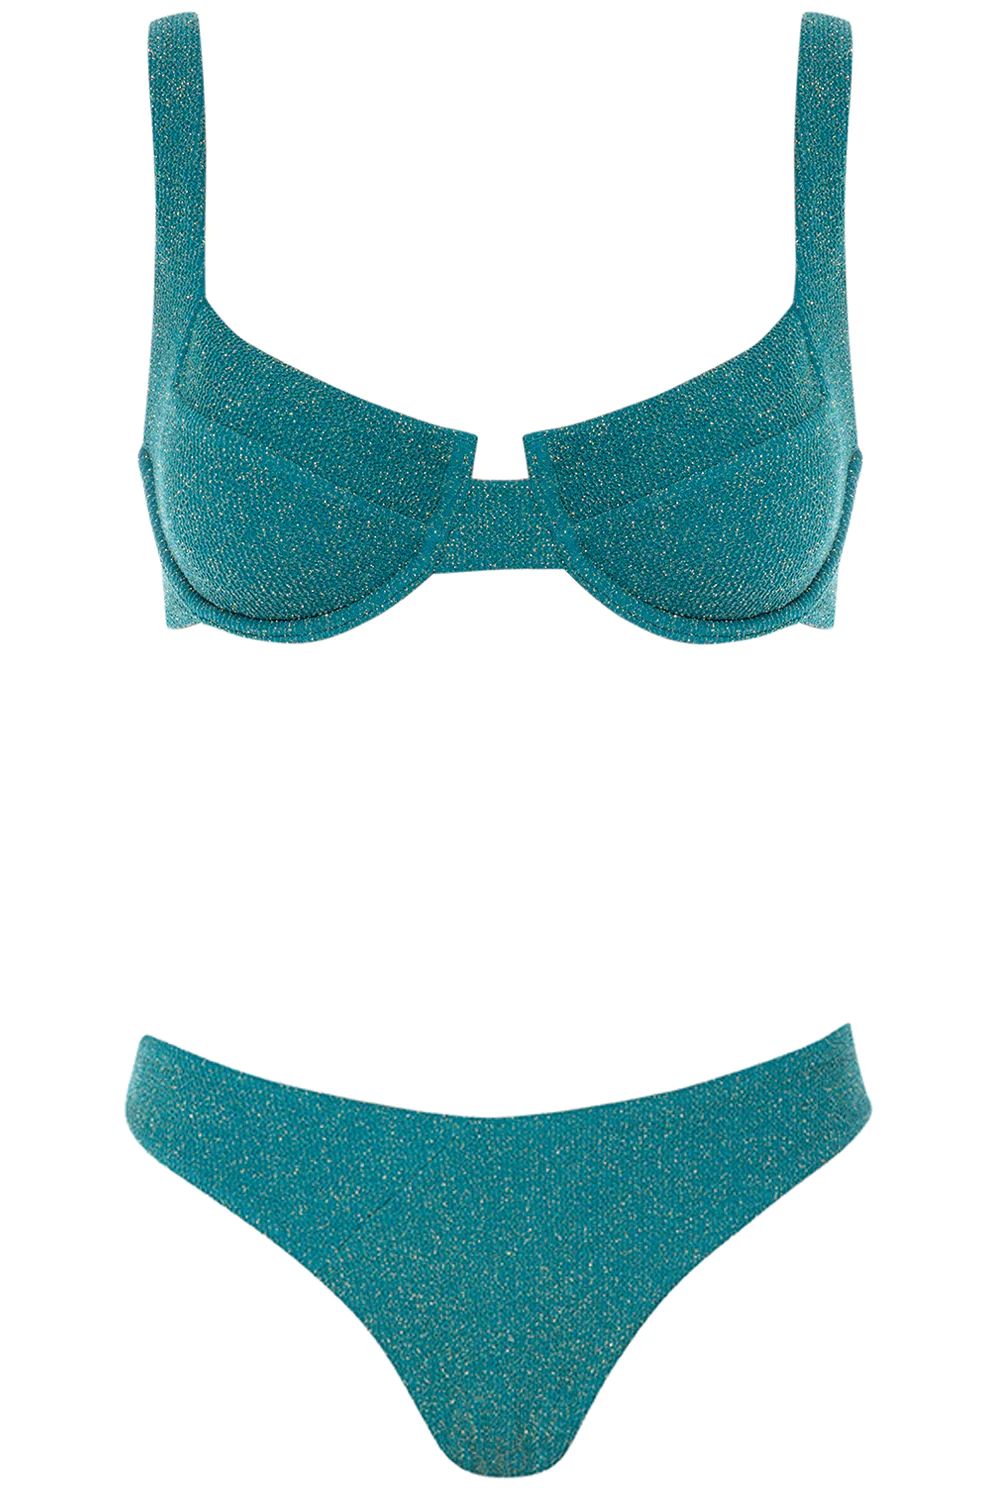 Laguna Bikini Emerald Set | VETCHY